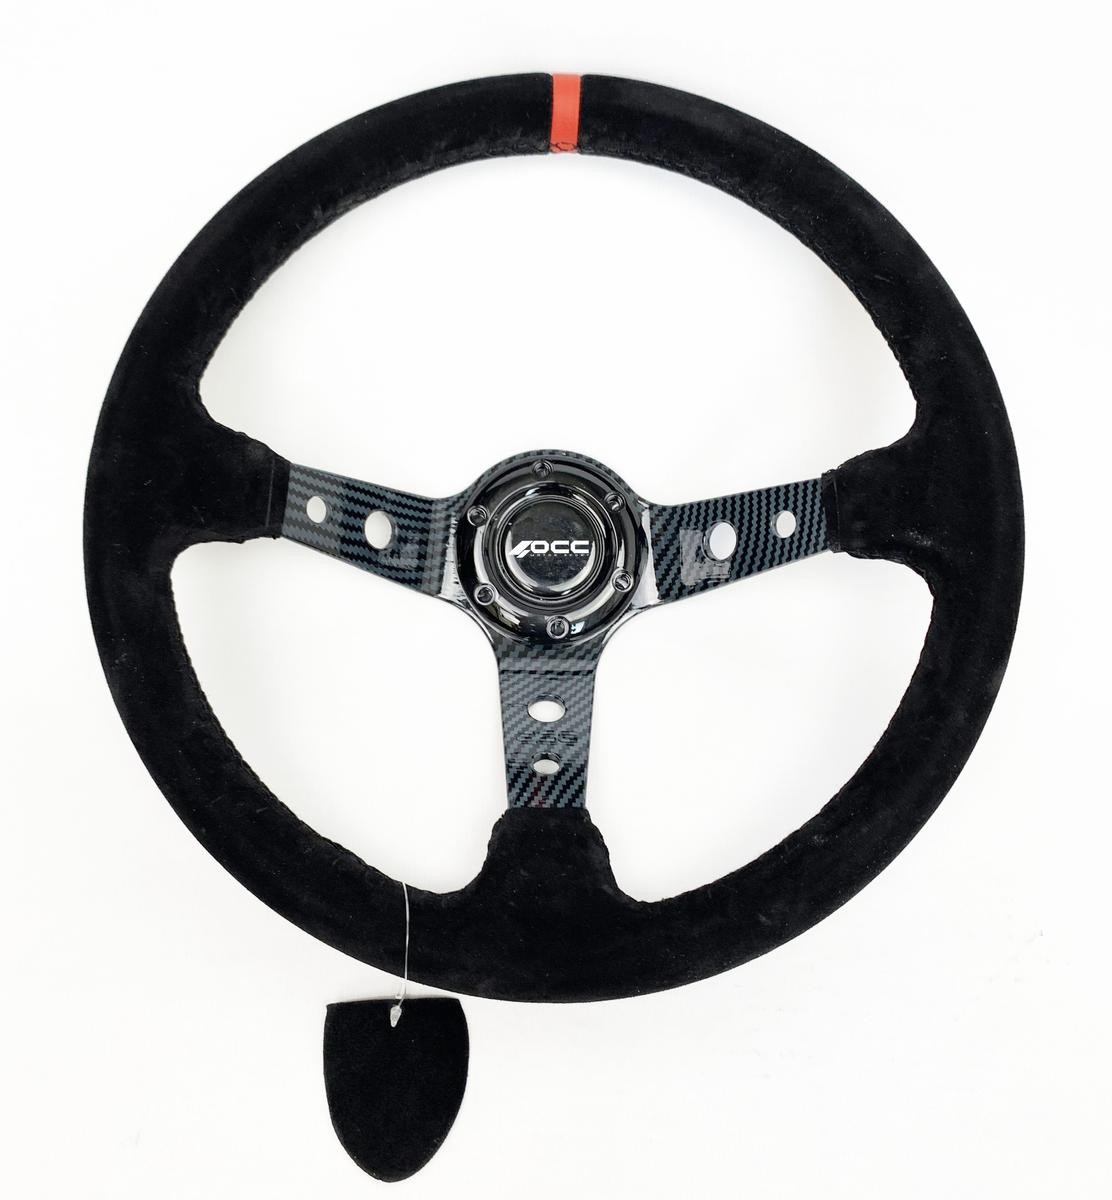 Suzuki SWIFT Sports steering wheel Occ Motorsport OCCVOL005 cheap